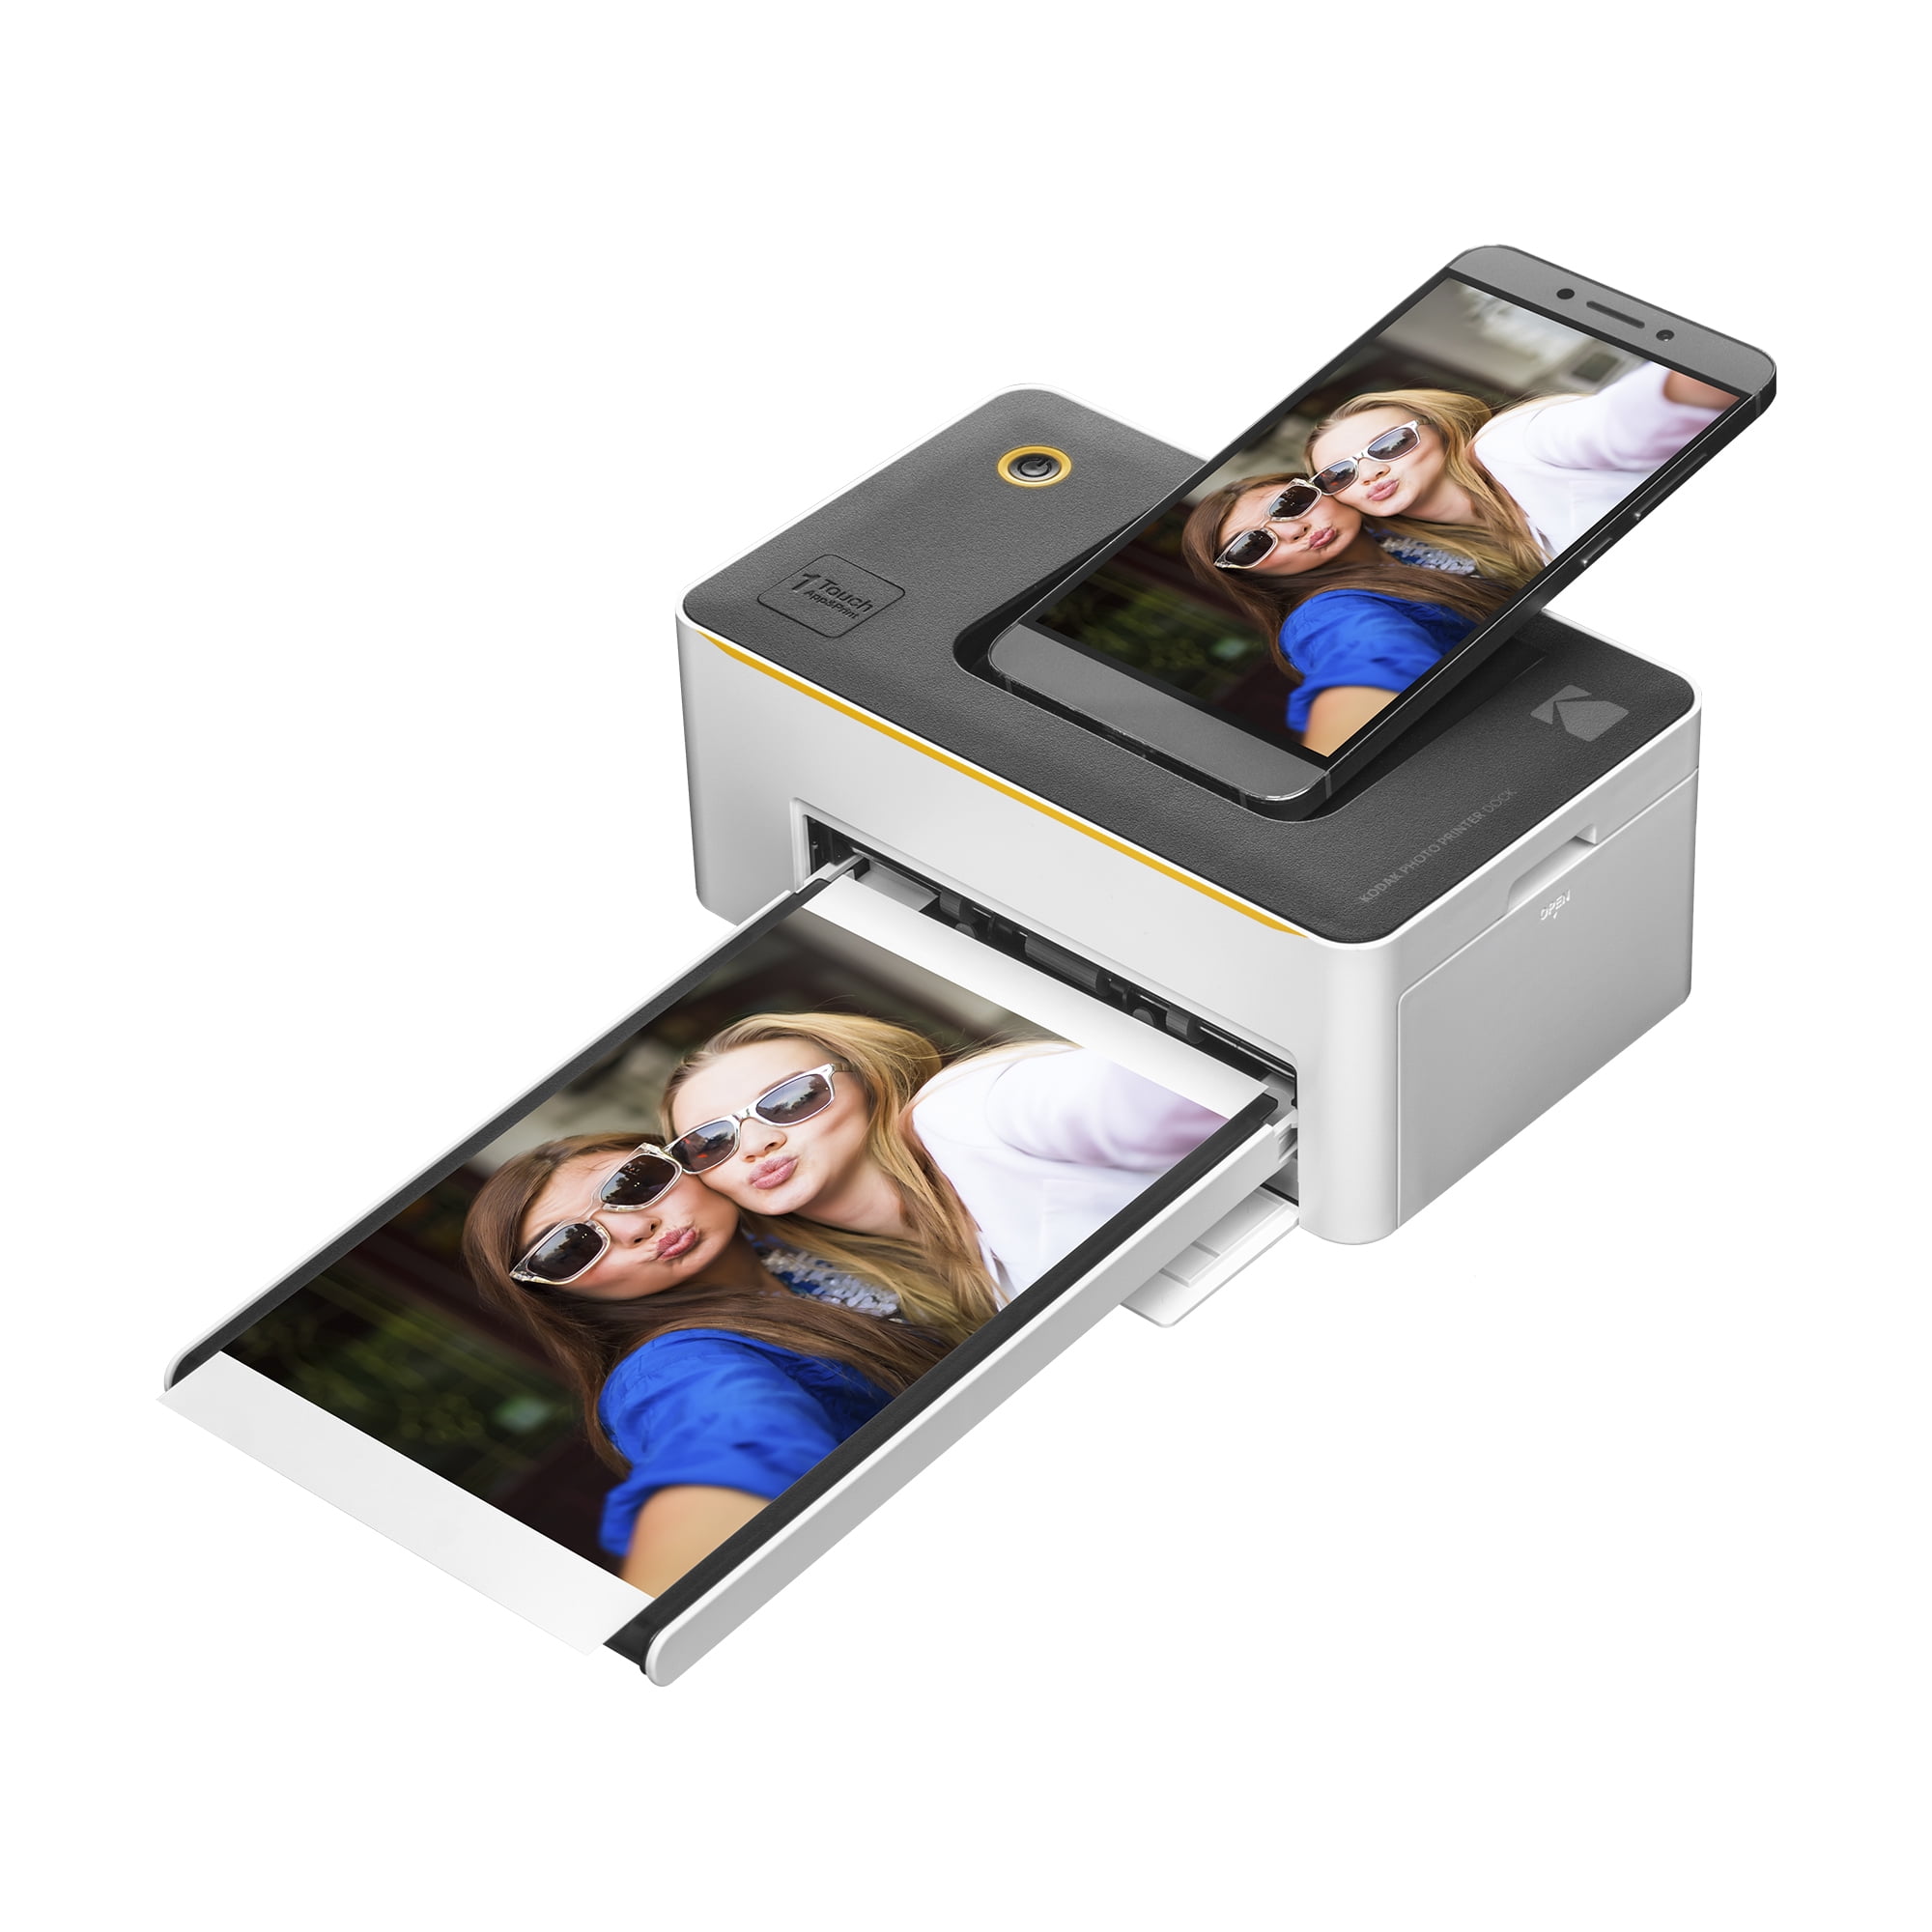 kodak-dock-plus-4x6-portable-instant-photo-printer-compatible-ios-android-cost-effective